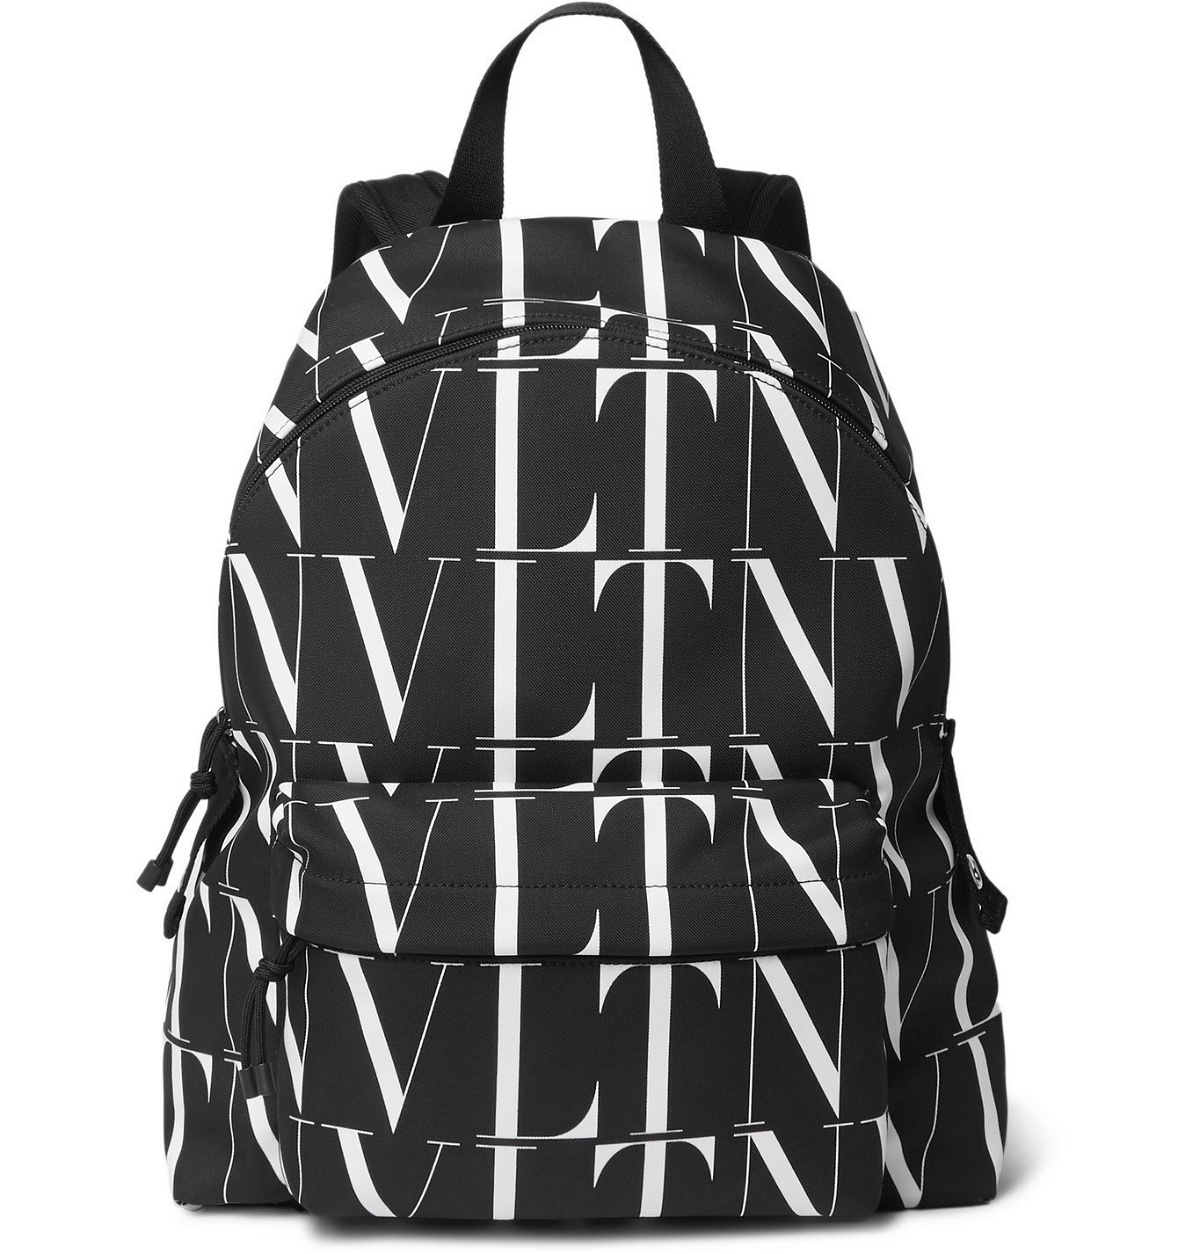 Valentino Garavani Vltn Print Backpack - Black